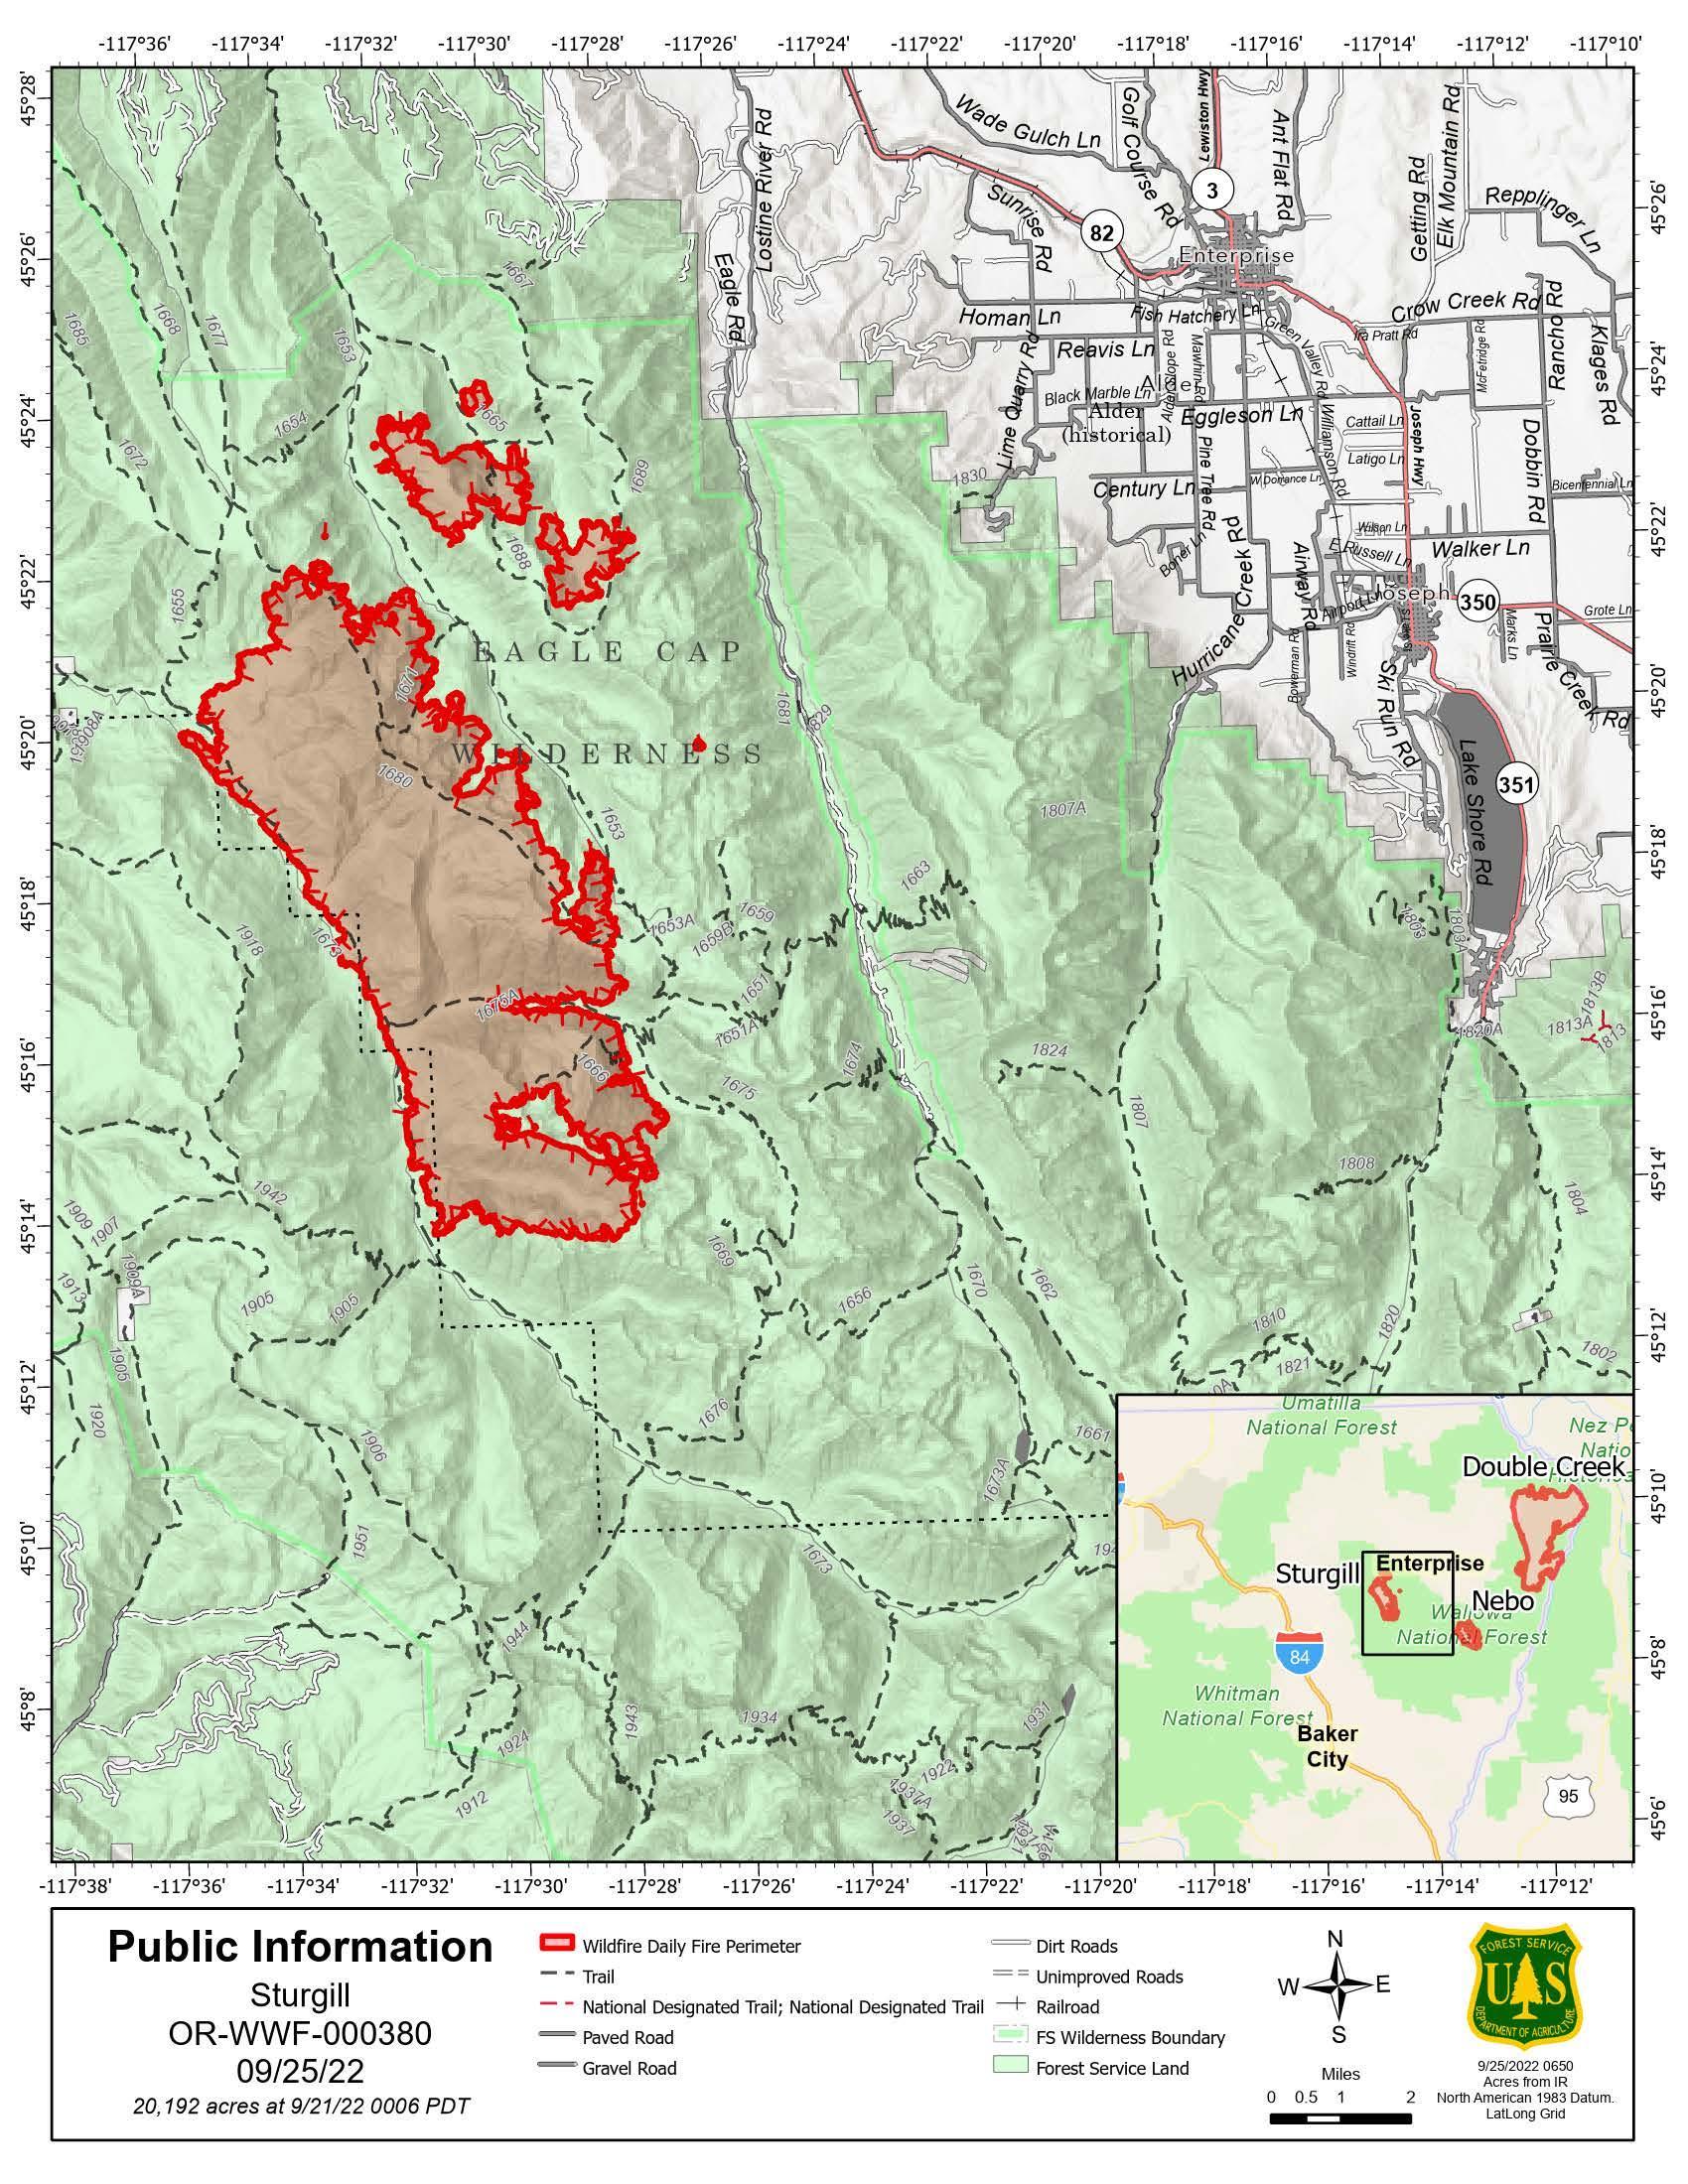 Goat Mountain 2 Fire Map - 09/25/2022